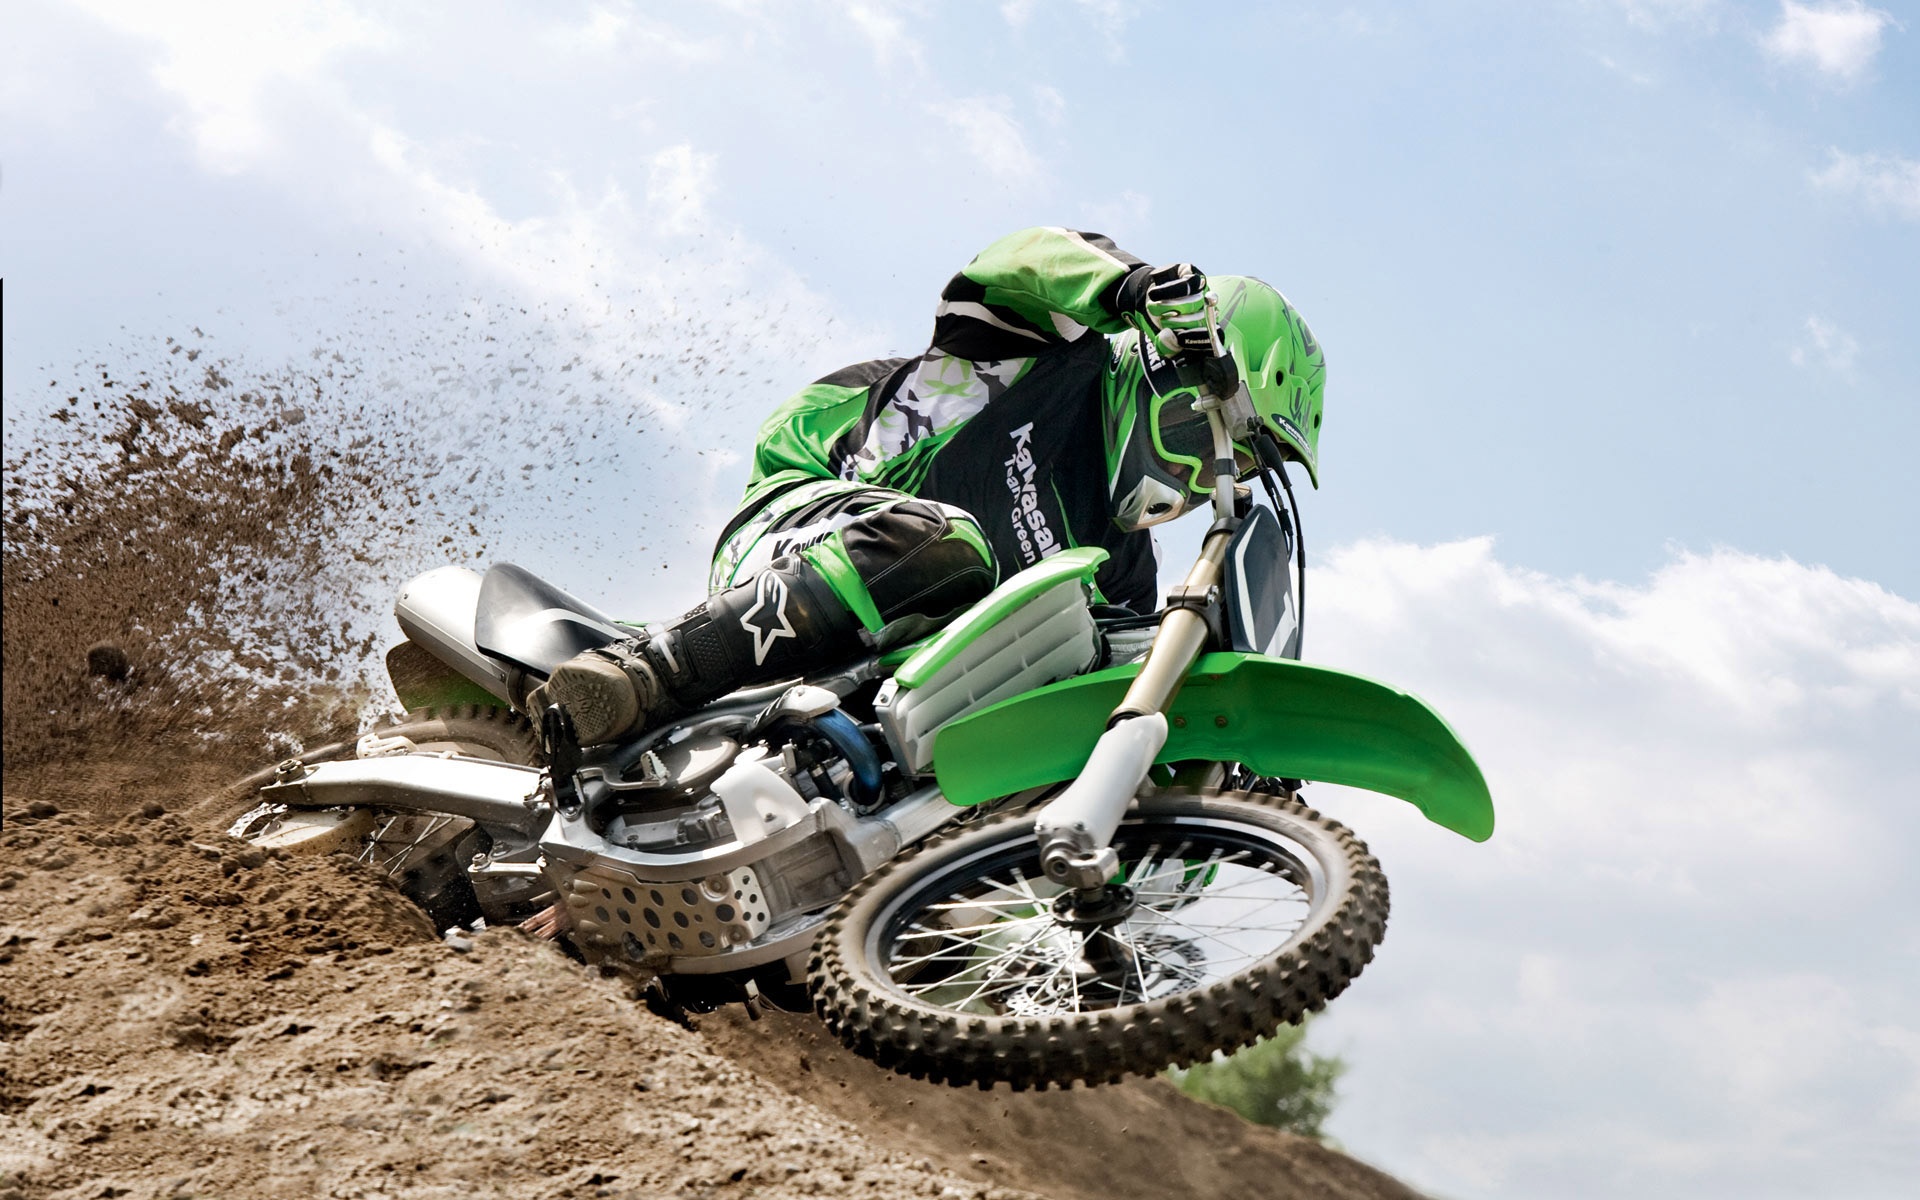 532500 Hintergrundbild herunterladen sport, moto cross, fahrrad, dreckiges fahrrad, motorrad, fahrzeug - Bildschirmschoner und Bilder kostenlos